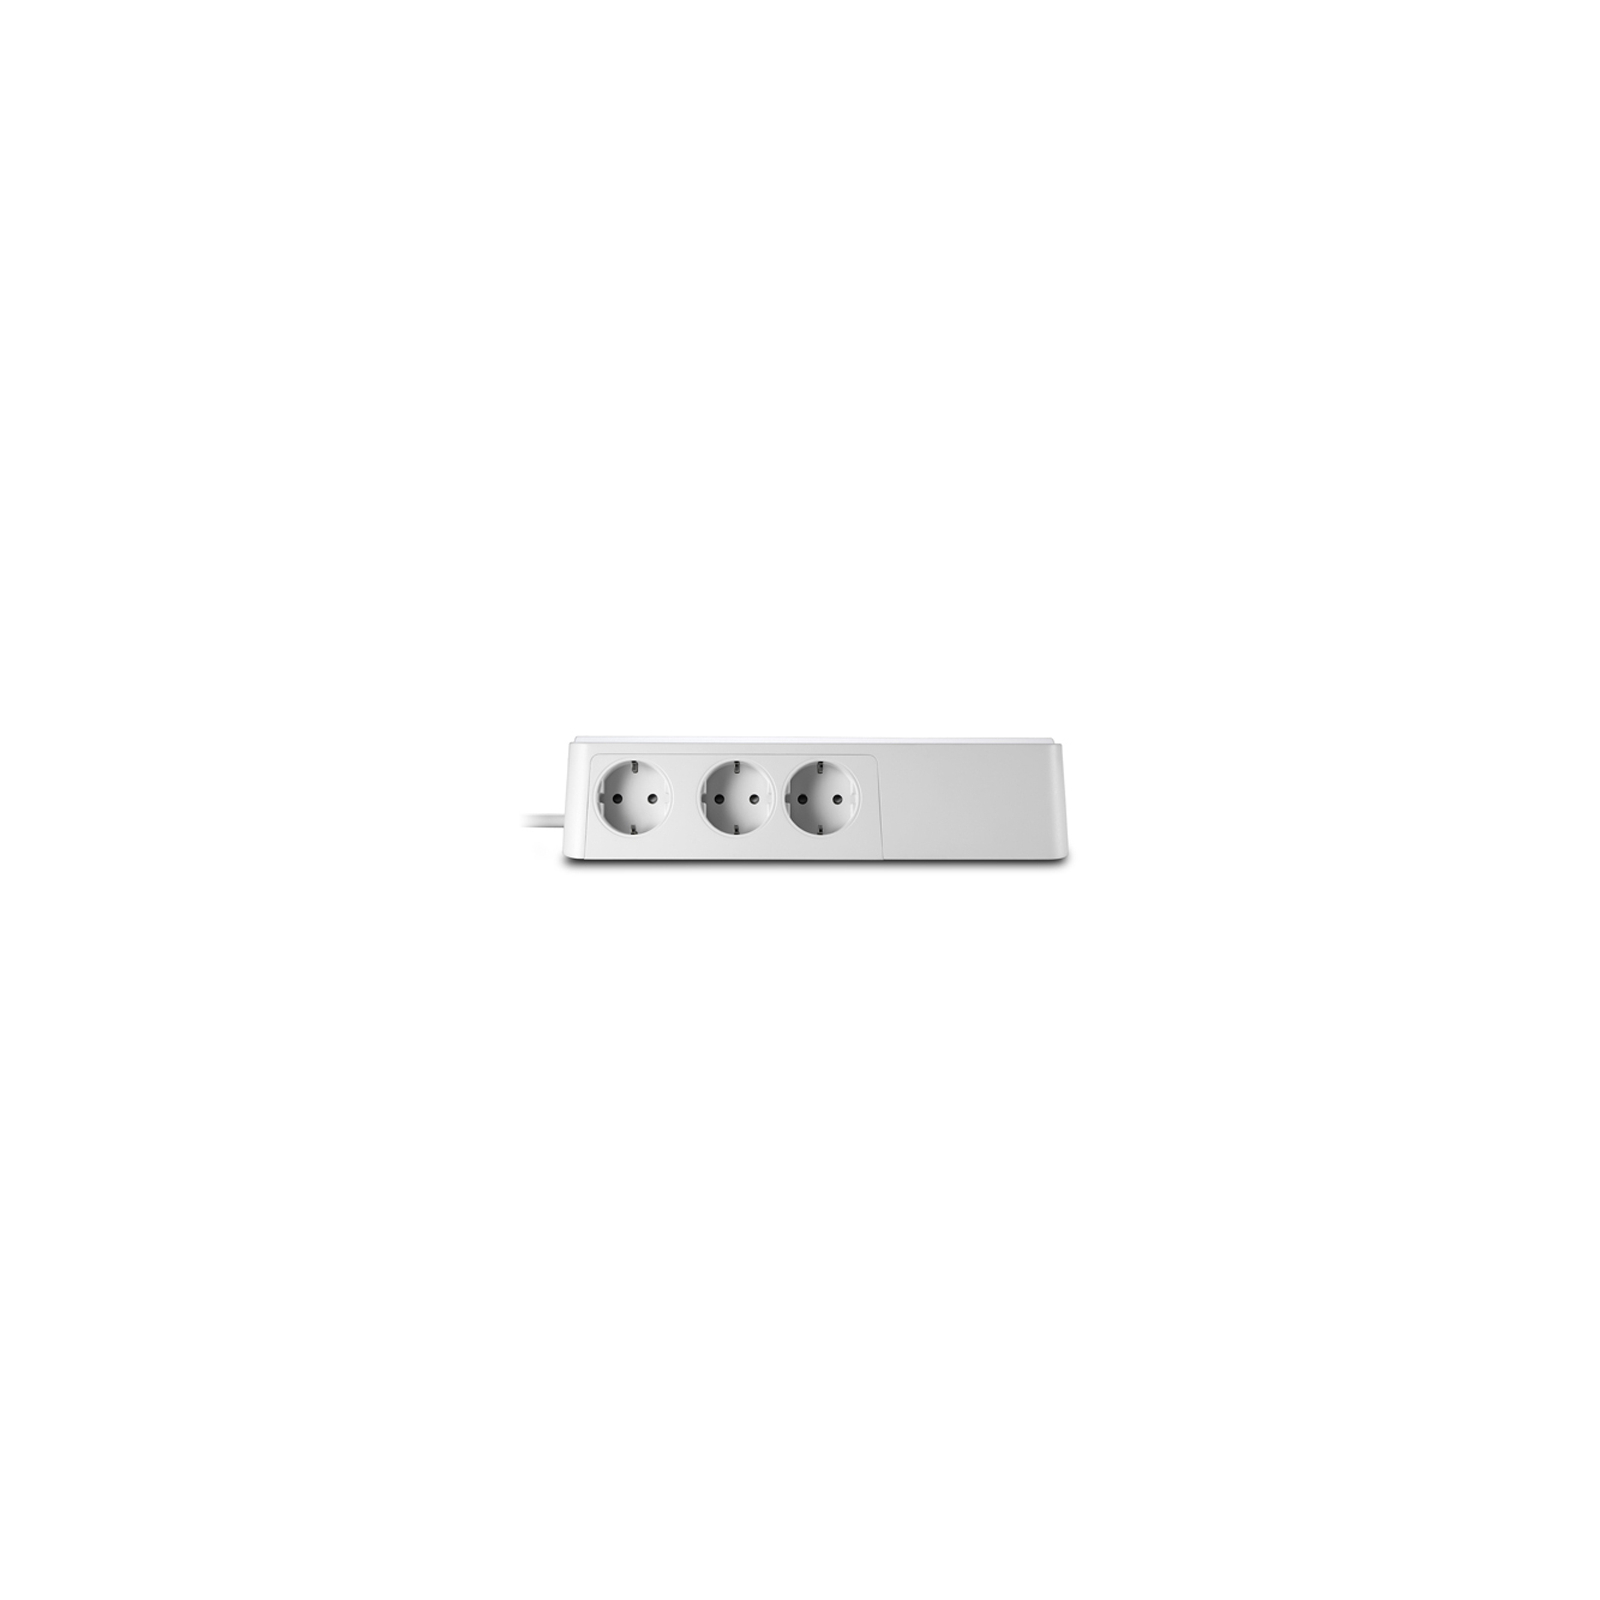 Сетевой фильтр питания APC Essential SurgeArrest 6 outlets + 2 USB (5V, 2.4A) port (PM6U-RS) изображение 3